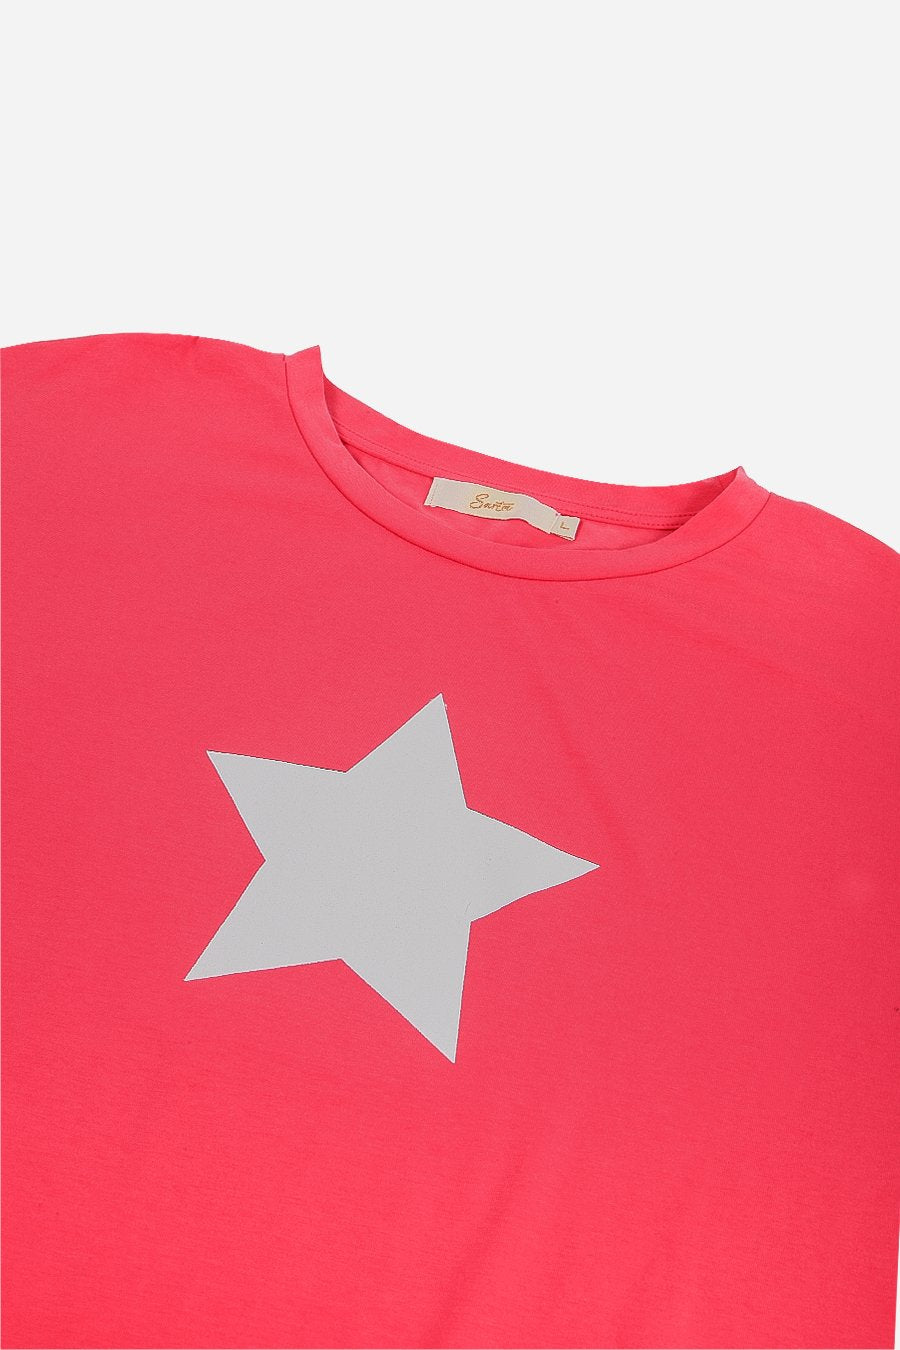 Silver Star T-Shirt - Raspberry